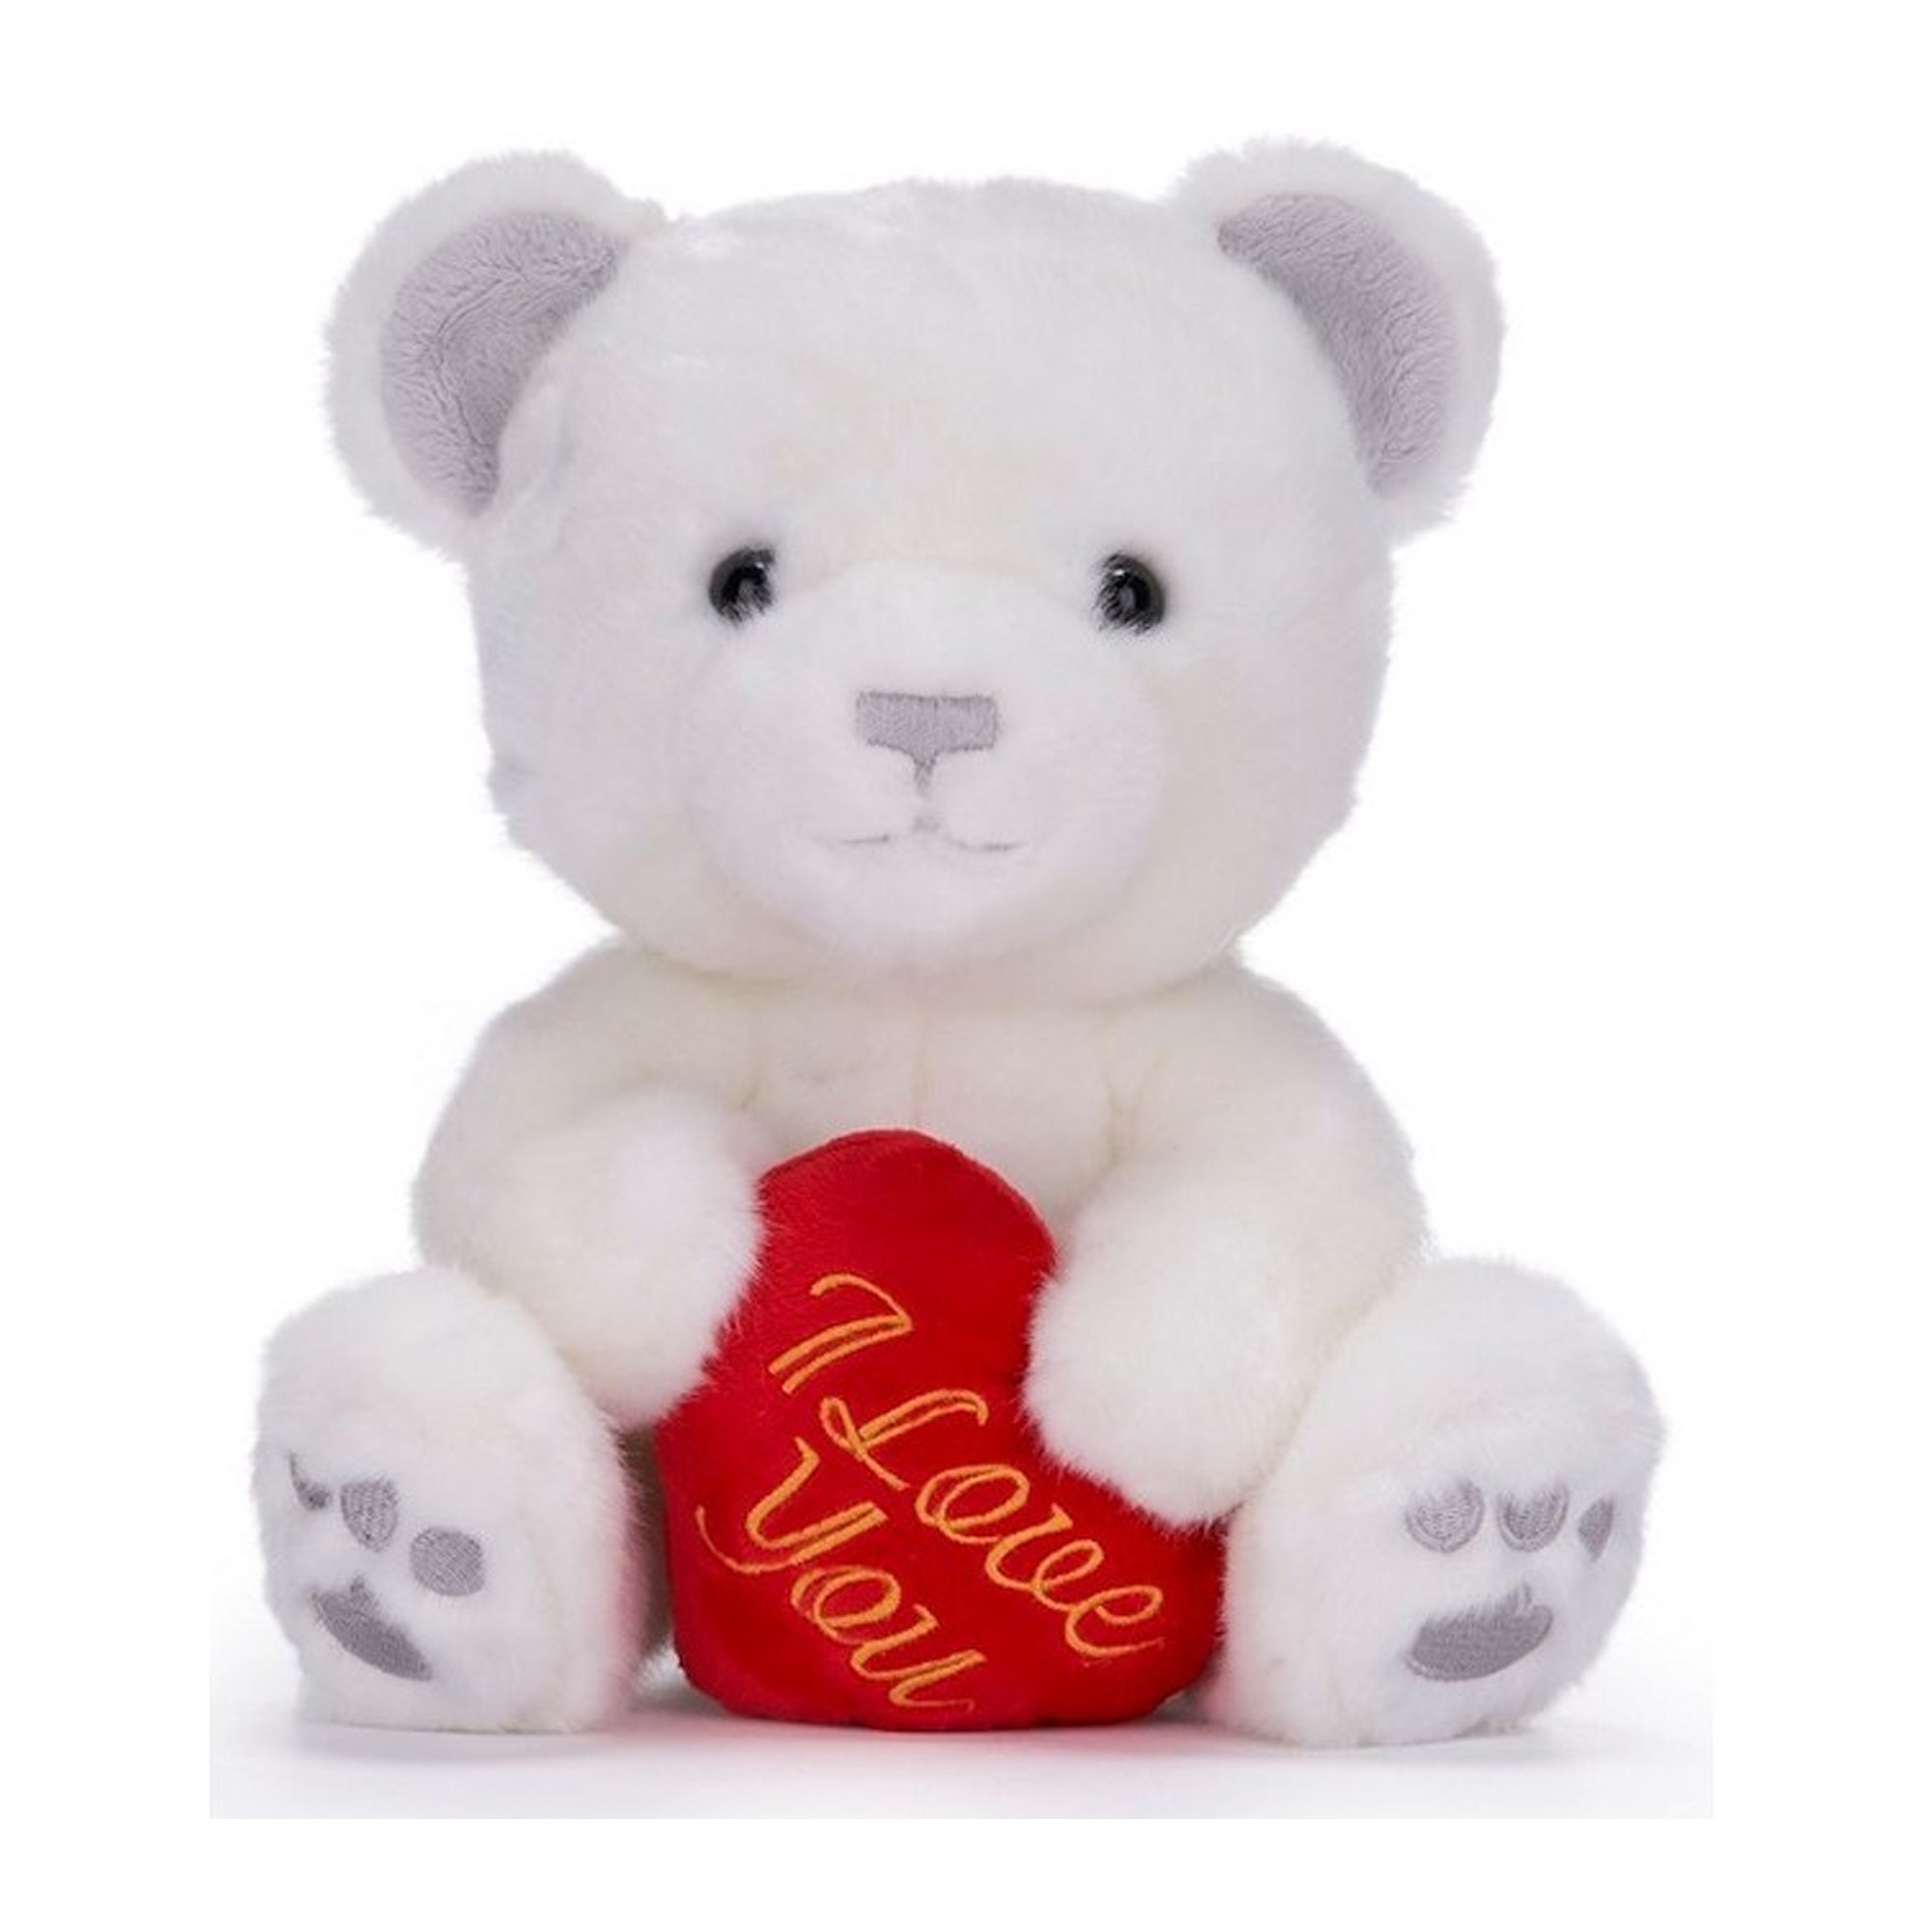 Valentijn I Love You knuffel beertje - zachte pluche - rood hartje - cadeau - 22 cm - wit